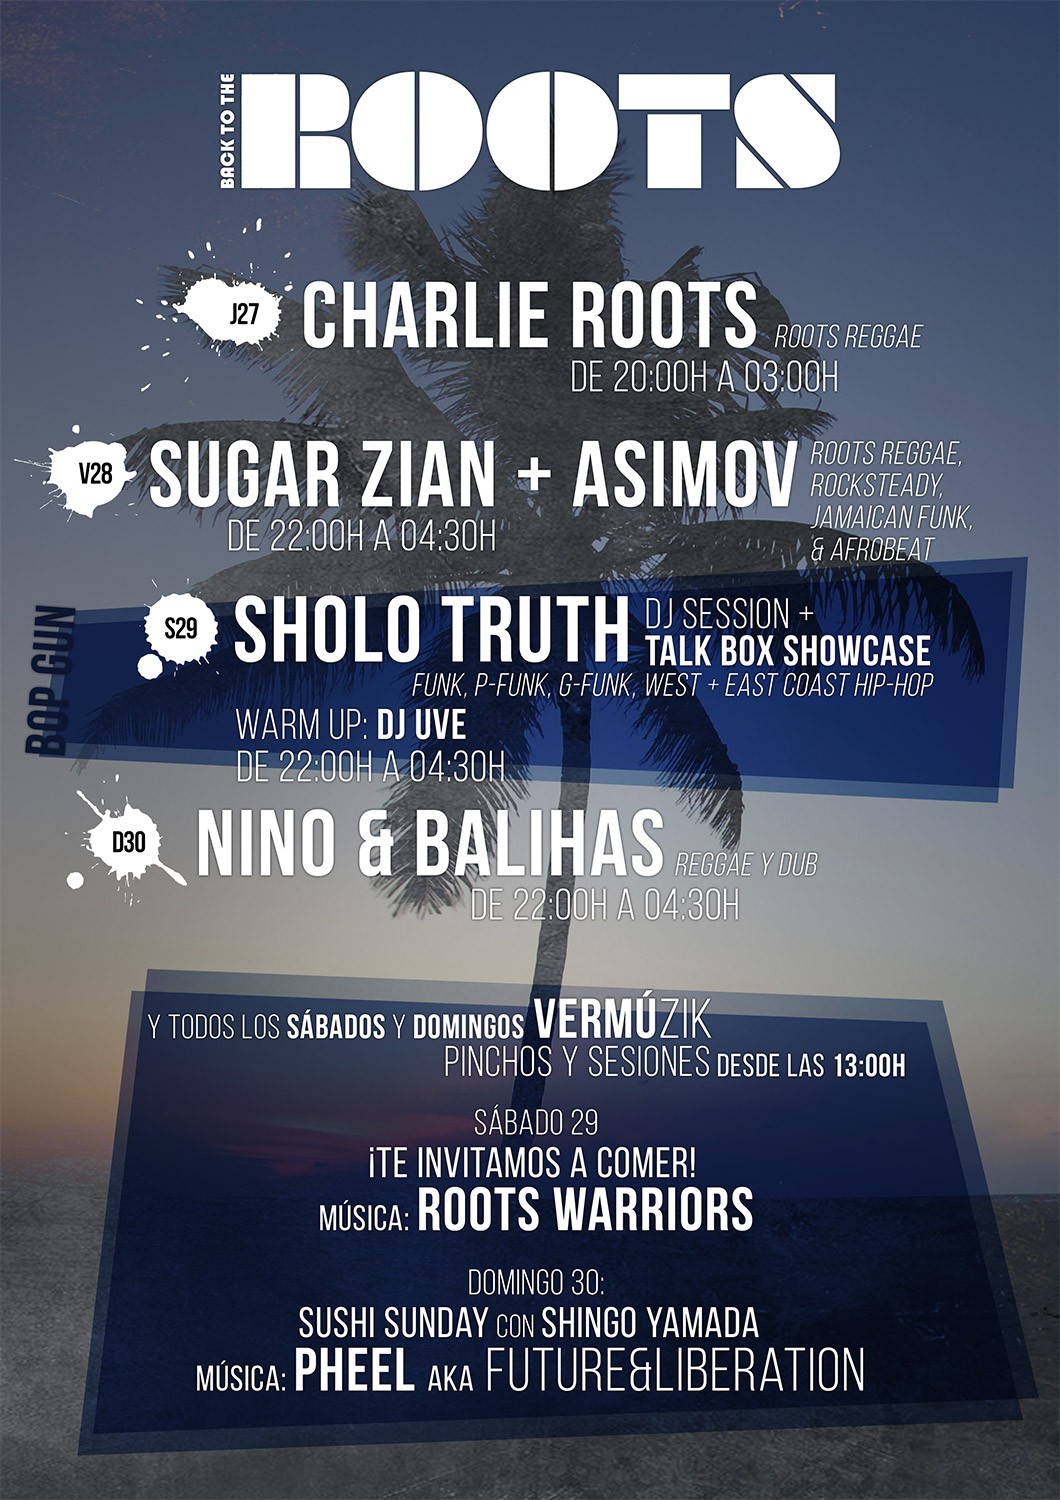 Sholo Truth con DJ UVE - Sugar Zian con Asimov - Roots